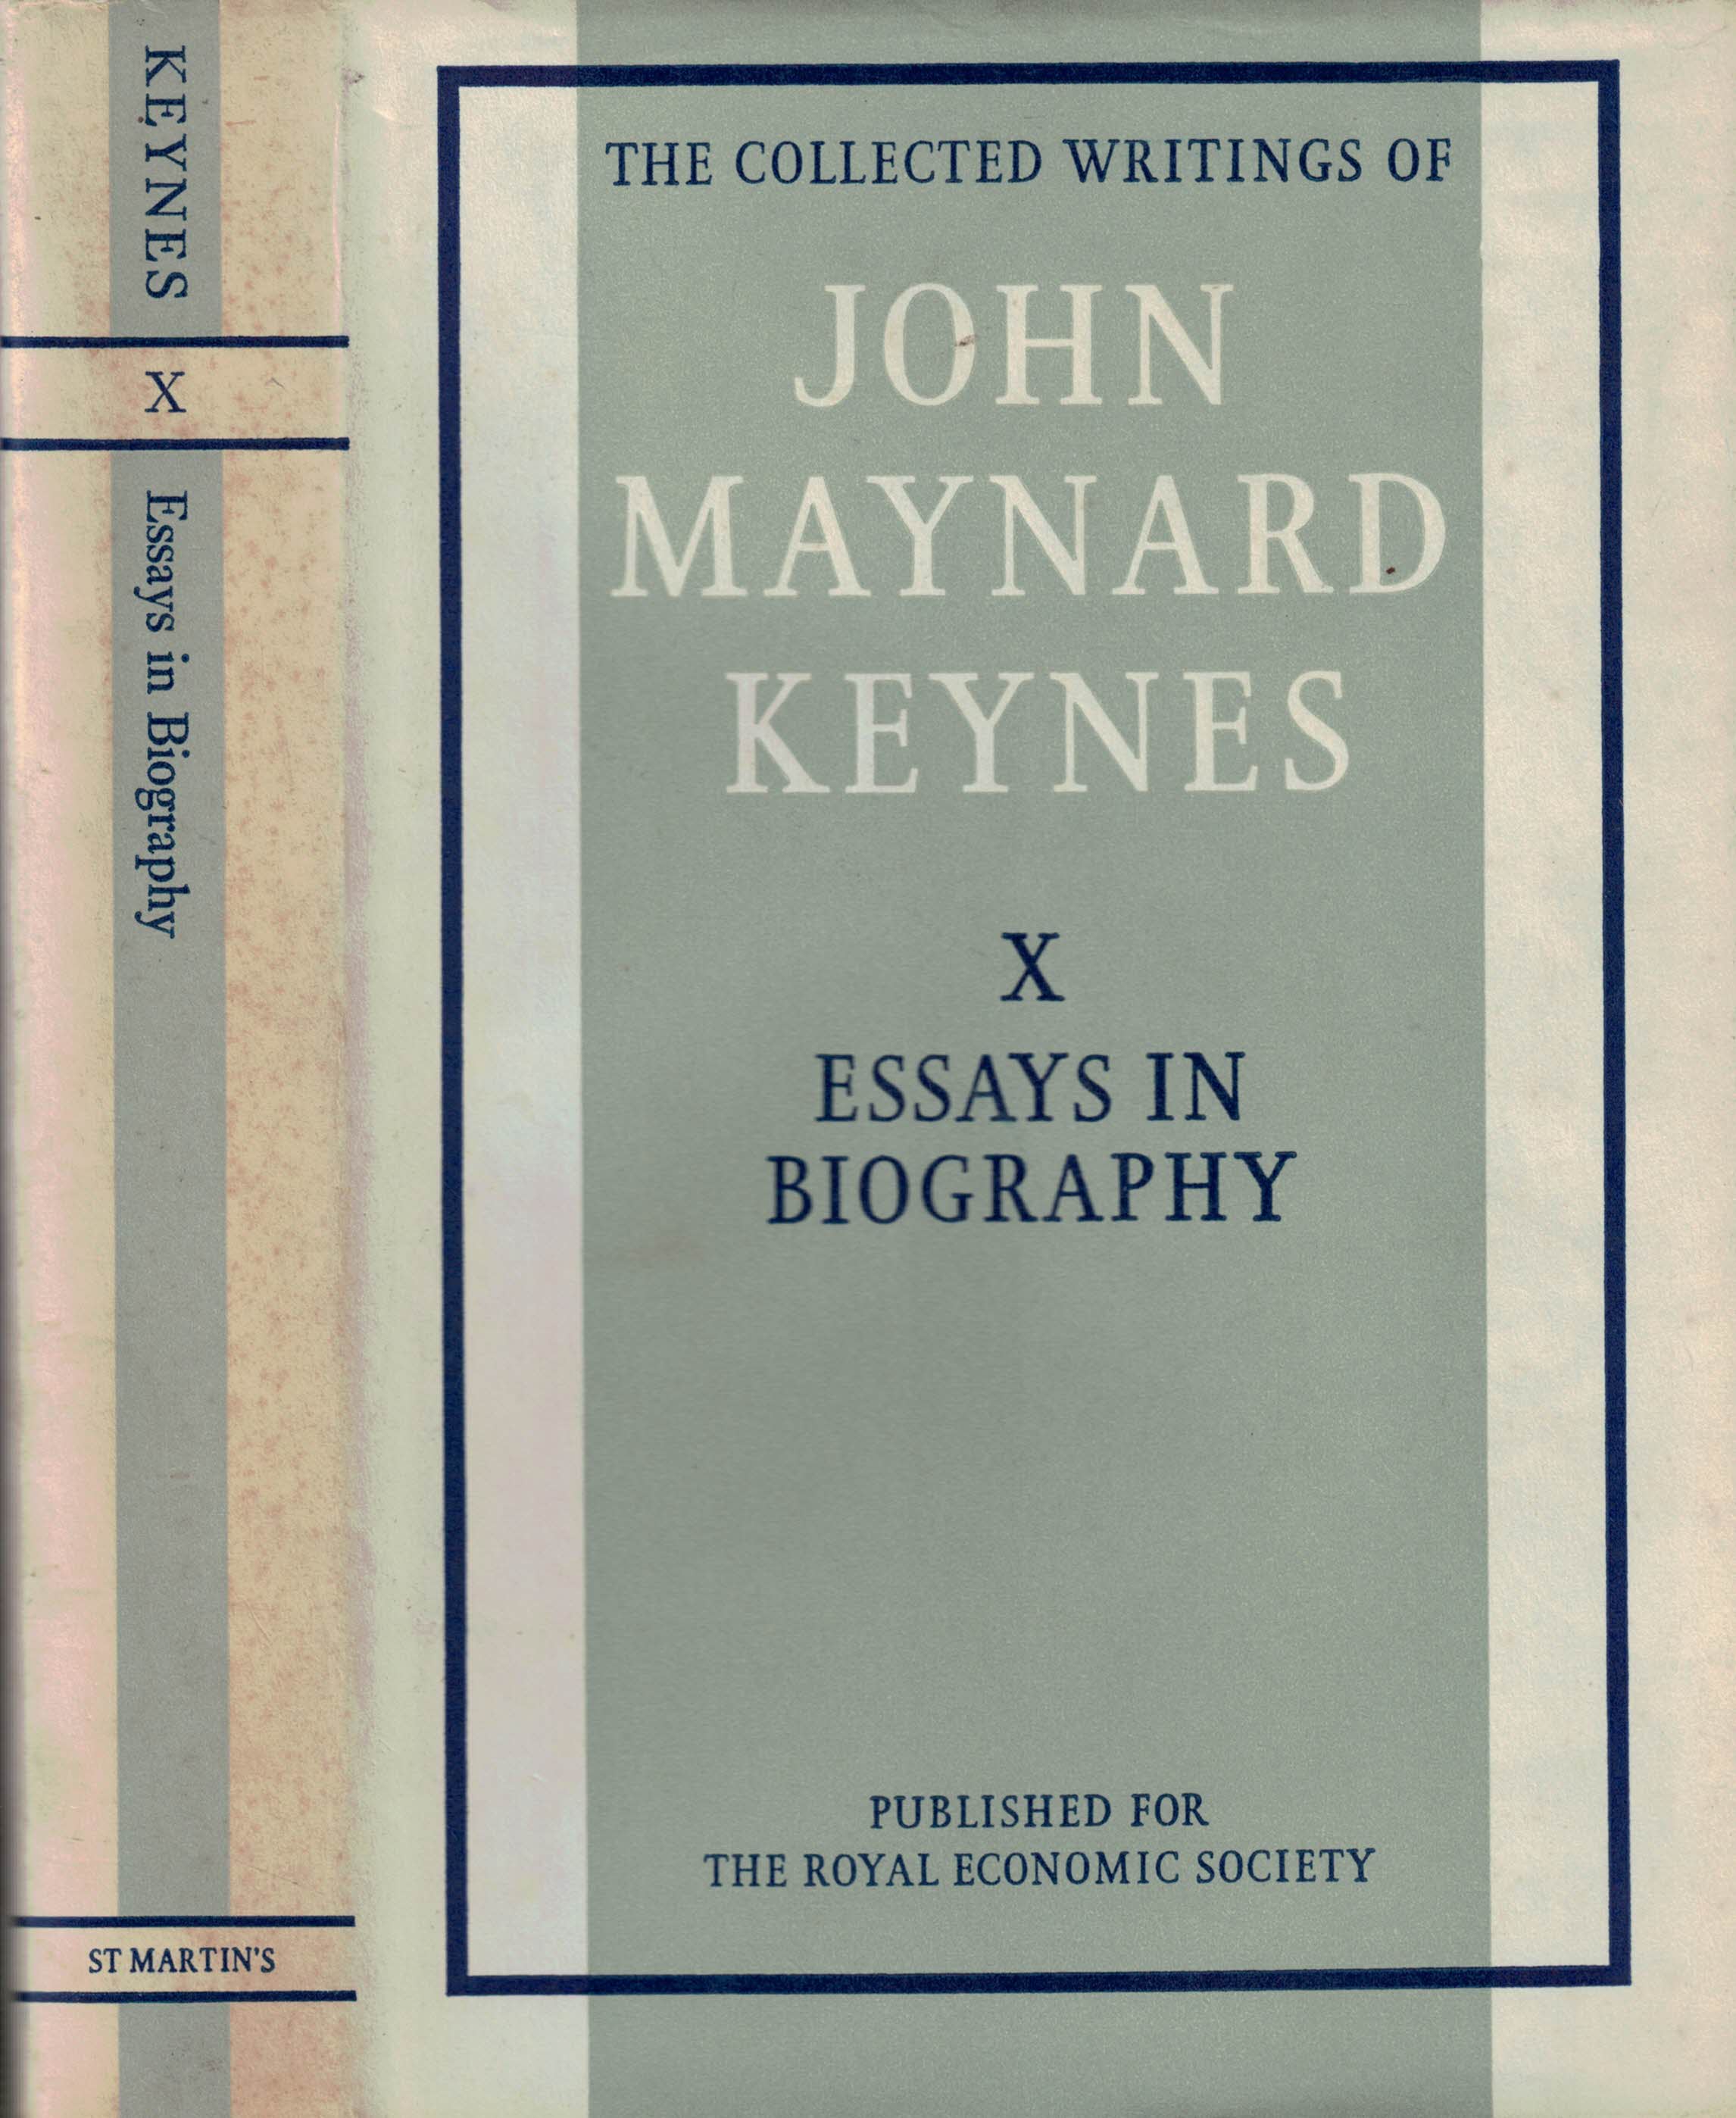 The Collected Writings of John Maynard Keynes. Volume X. Essays in Biography.